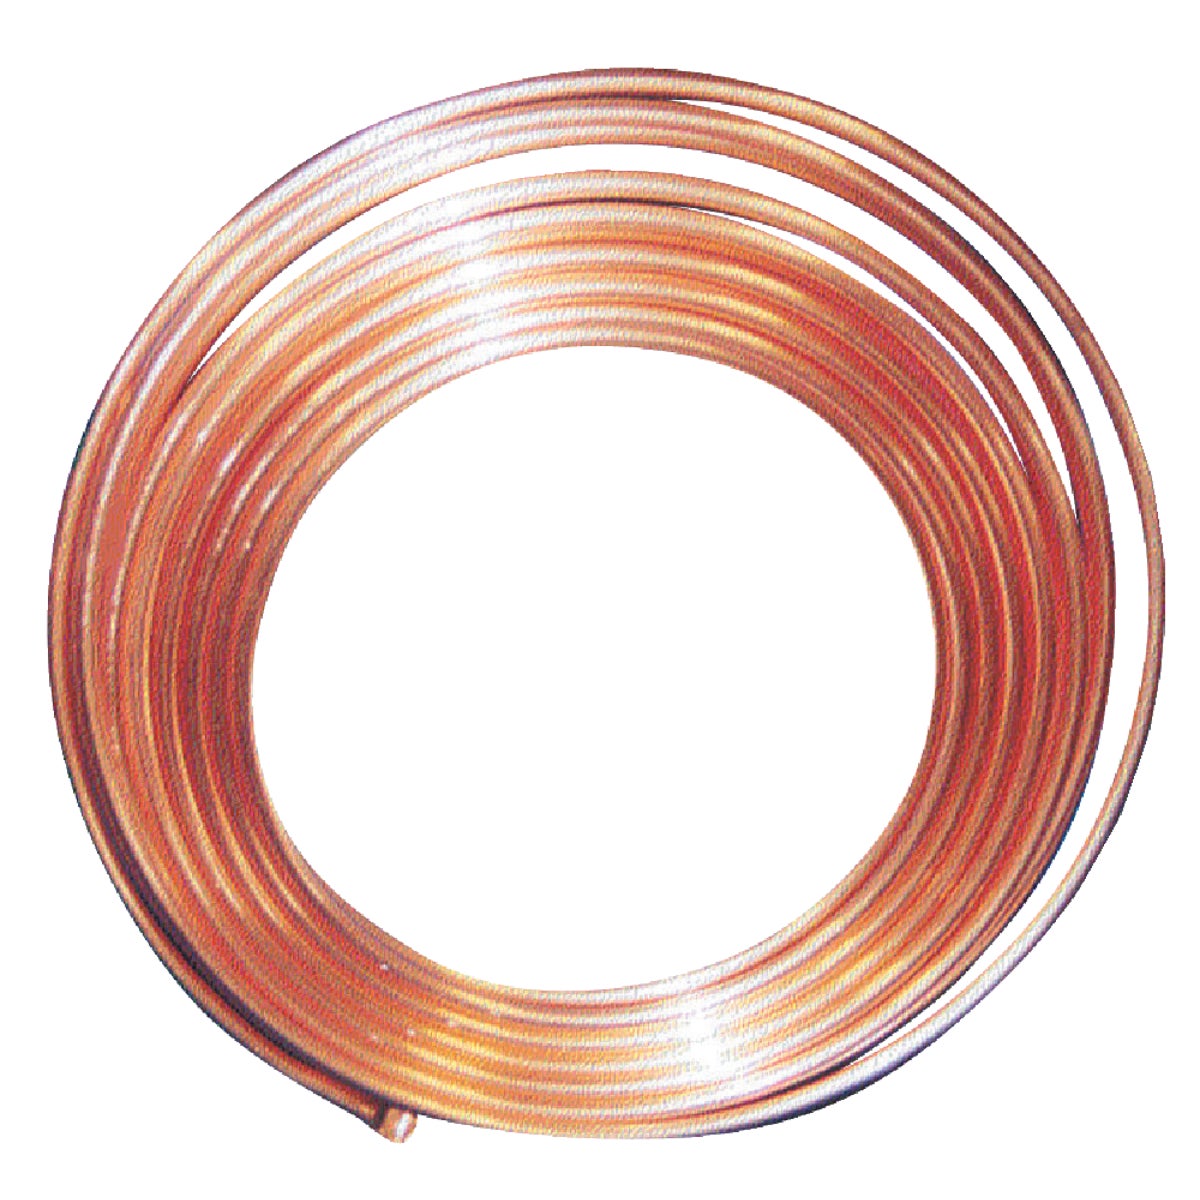 B&K 1/2 In. ID x 60 Ft. Type L Copper Tubing